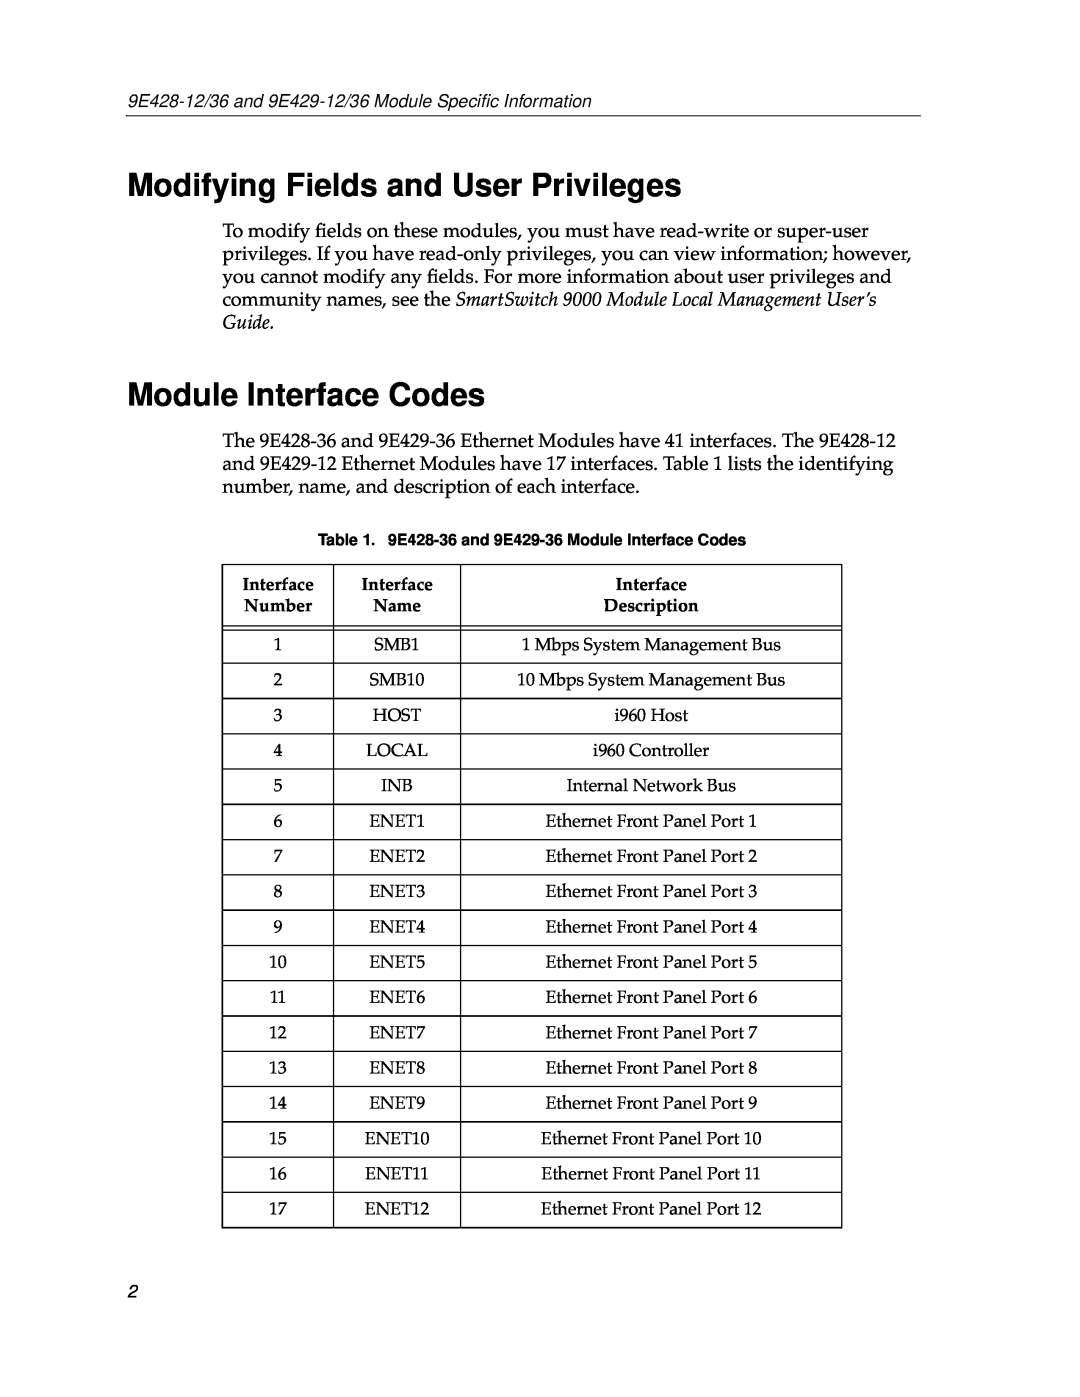 Cabletron Systems 9E429-36, 9E428-36, 9E428-12, 9E429-12 appendix Modifying Fields and User Privileges, Module Interface Codes 